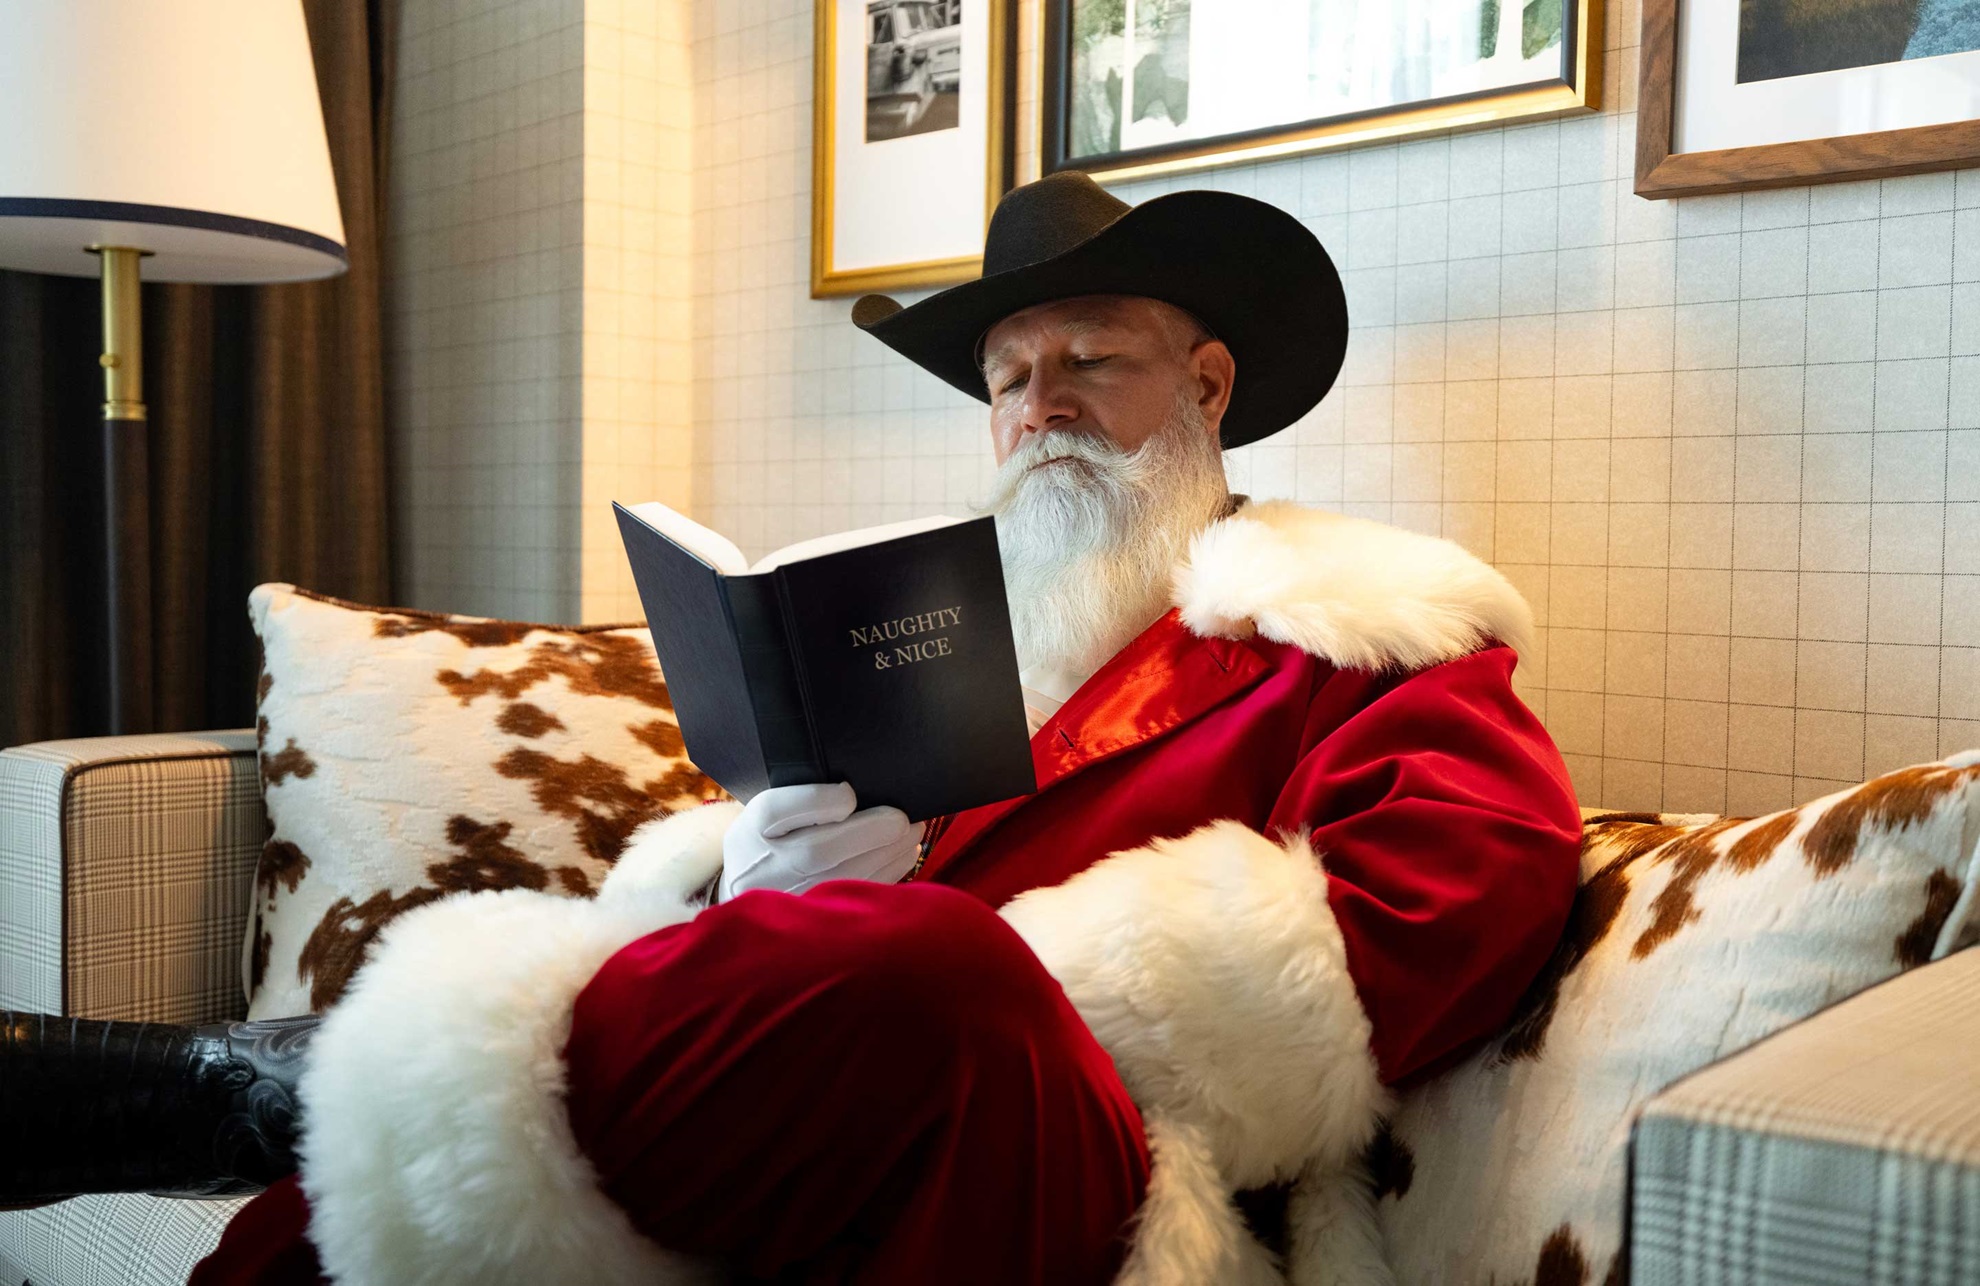 Santa reading Naughty & Nice book.